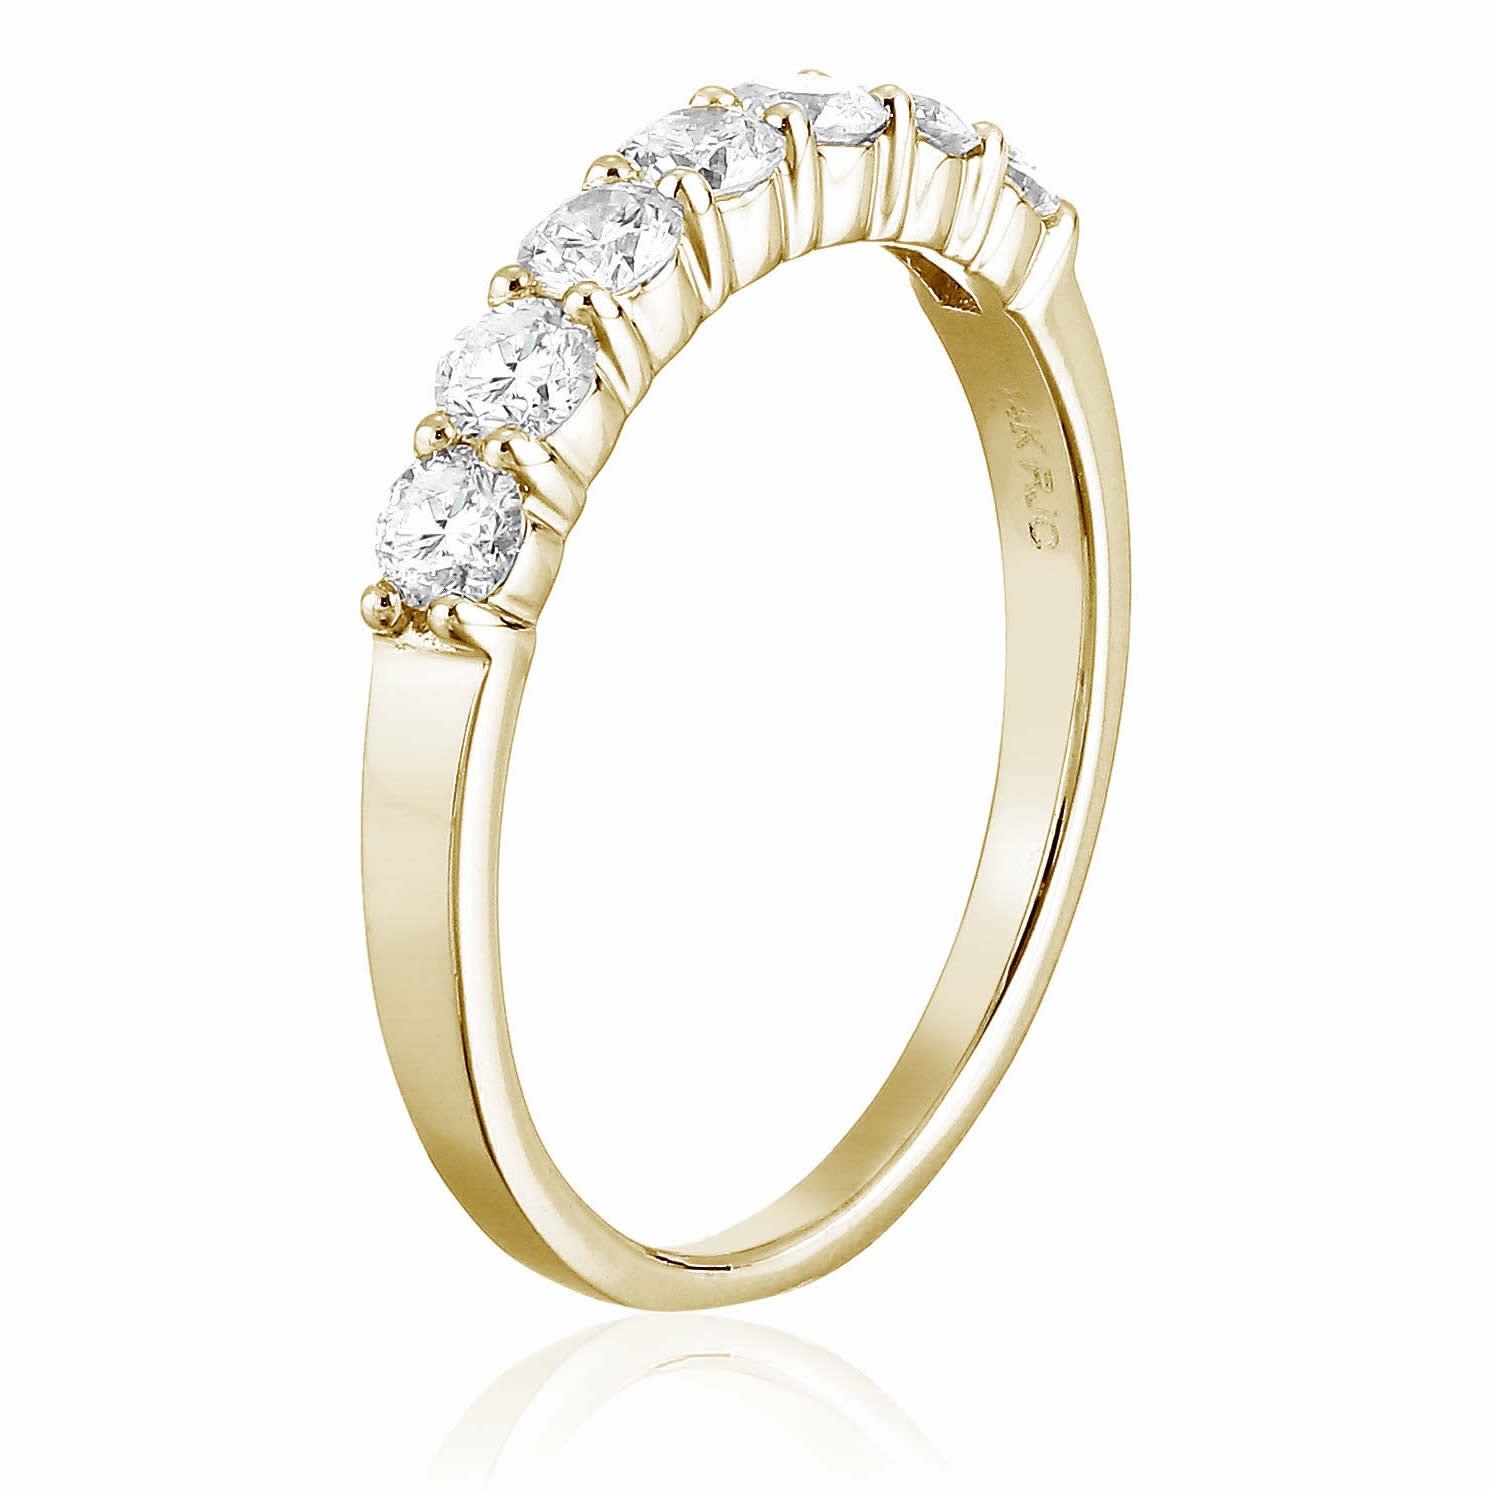 1/2 carat (ctw) Diamond Wedding Anniversary Band for Women, Round Diamond Engagement Ring 14K Yellow Gold Prong Set 0.50 cttw, Size 4-10